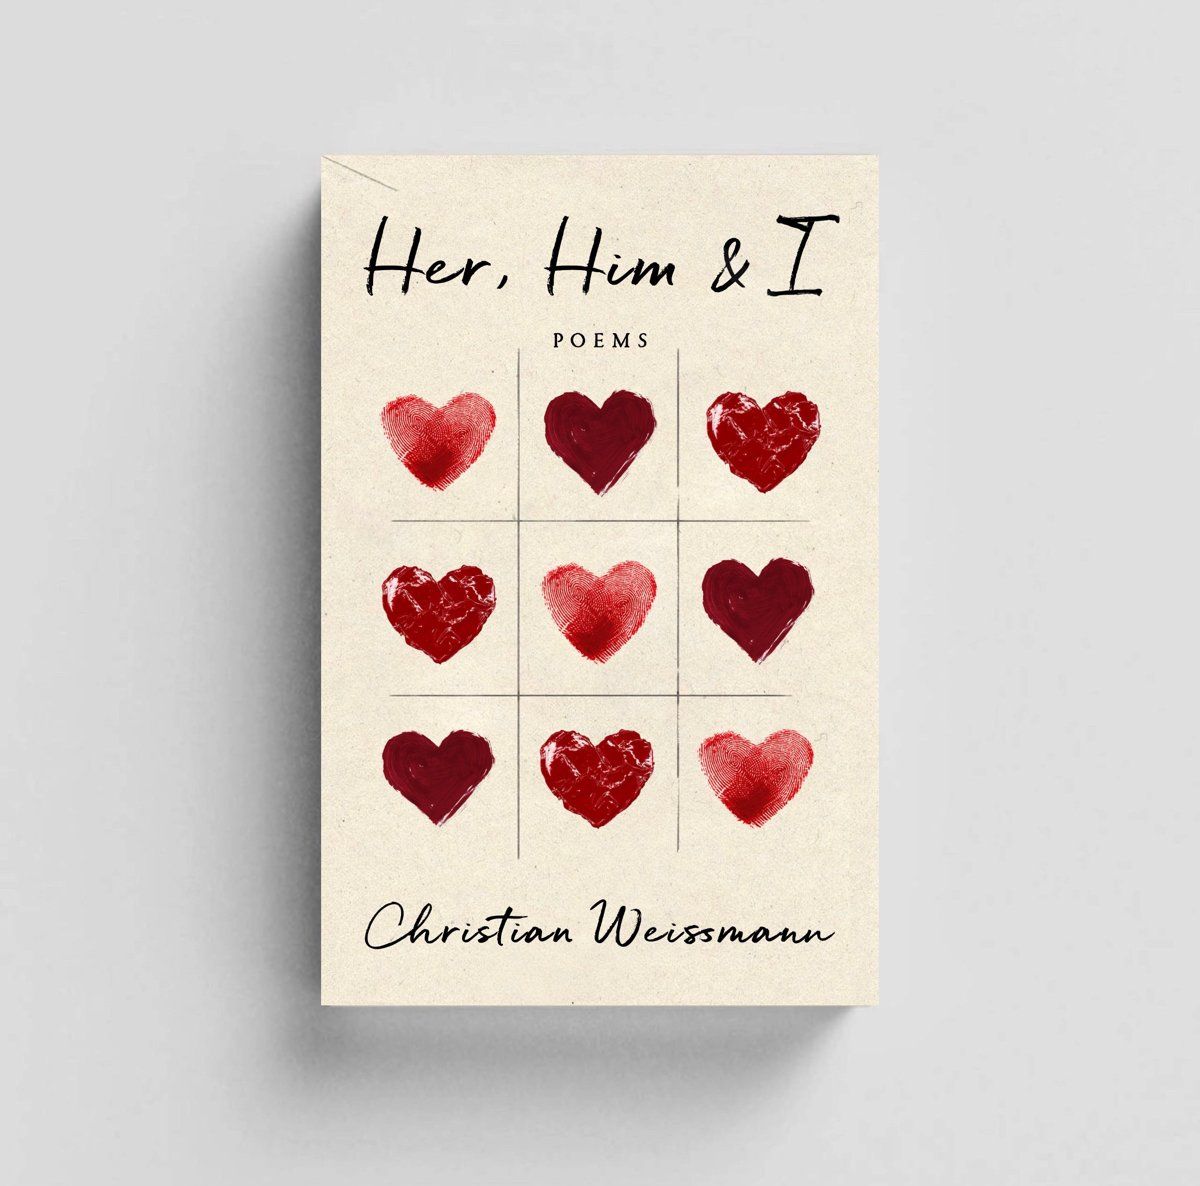 Her, Him & I by Christian Weissmann